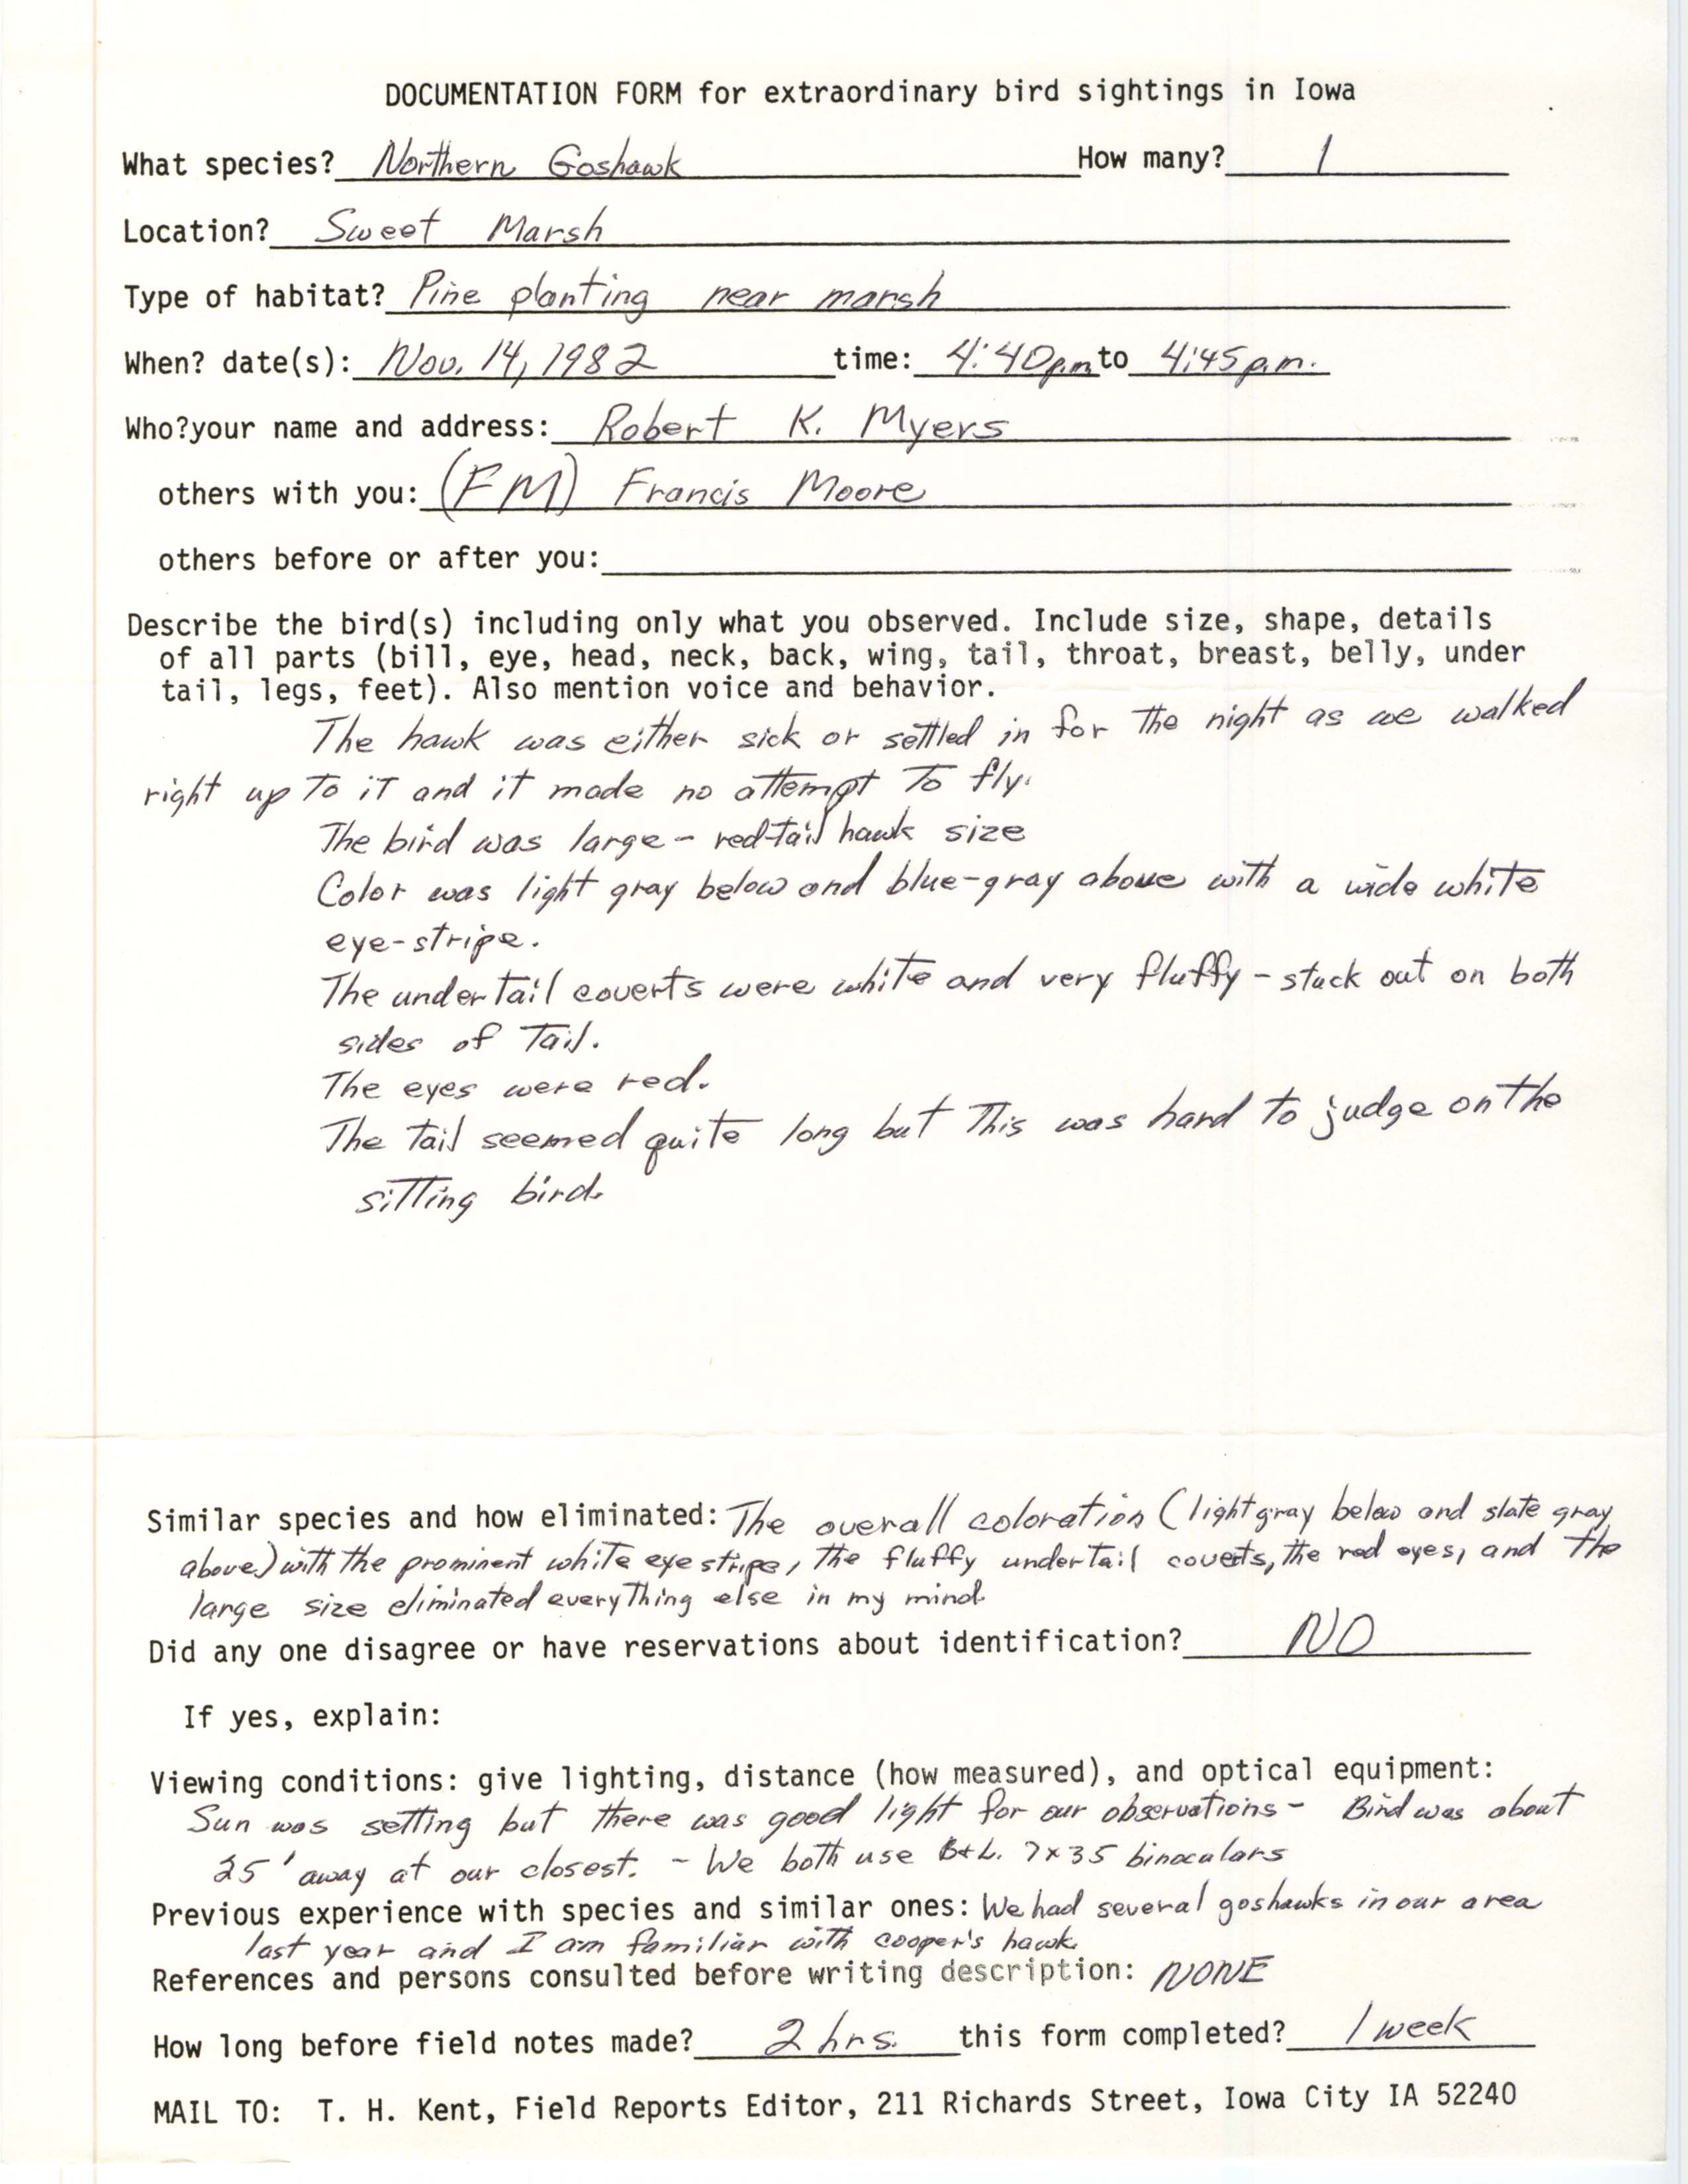 Rare bird documentation form for Northern Goshawk at Sweet Marsh in 1982